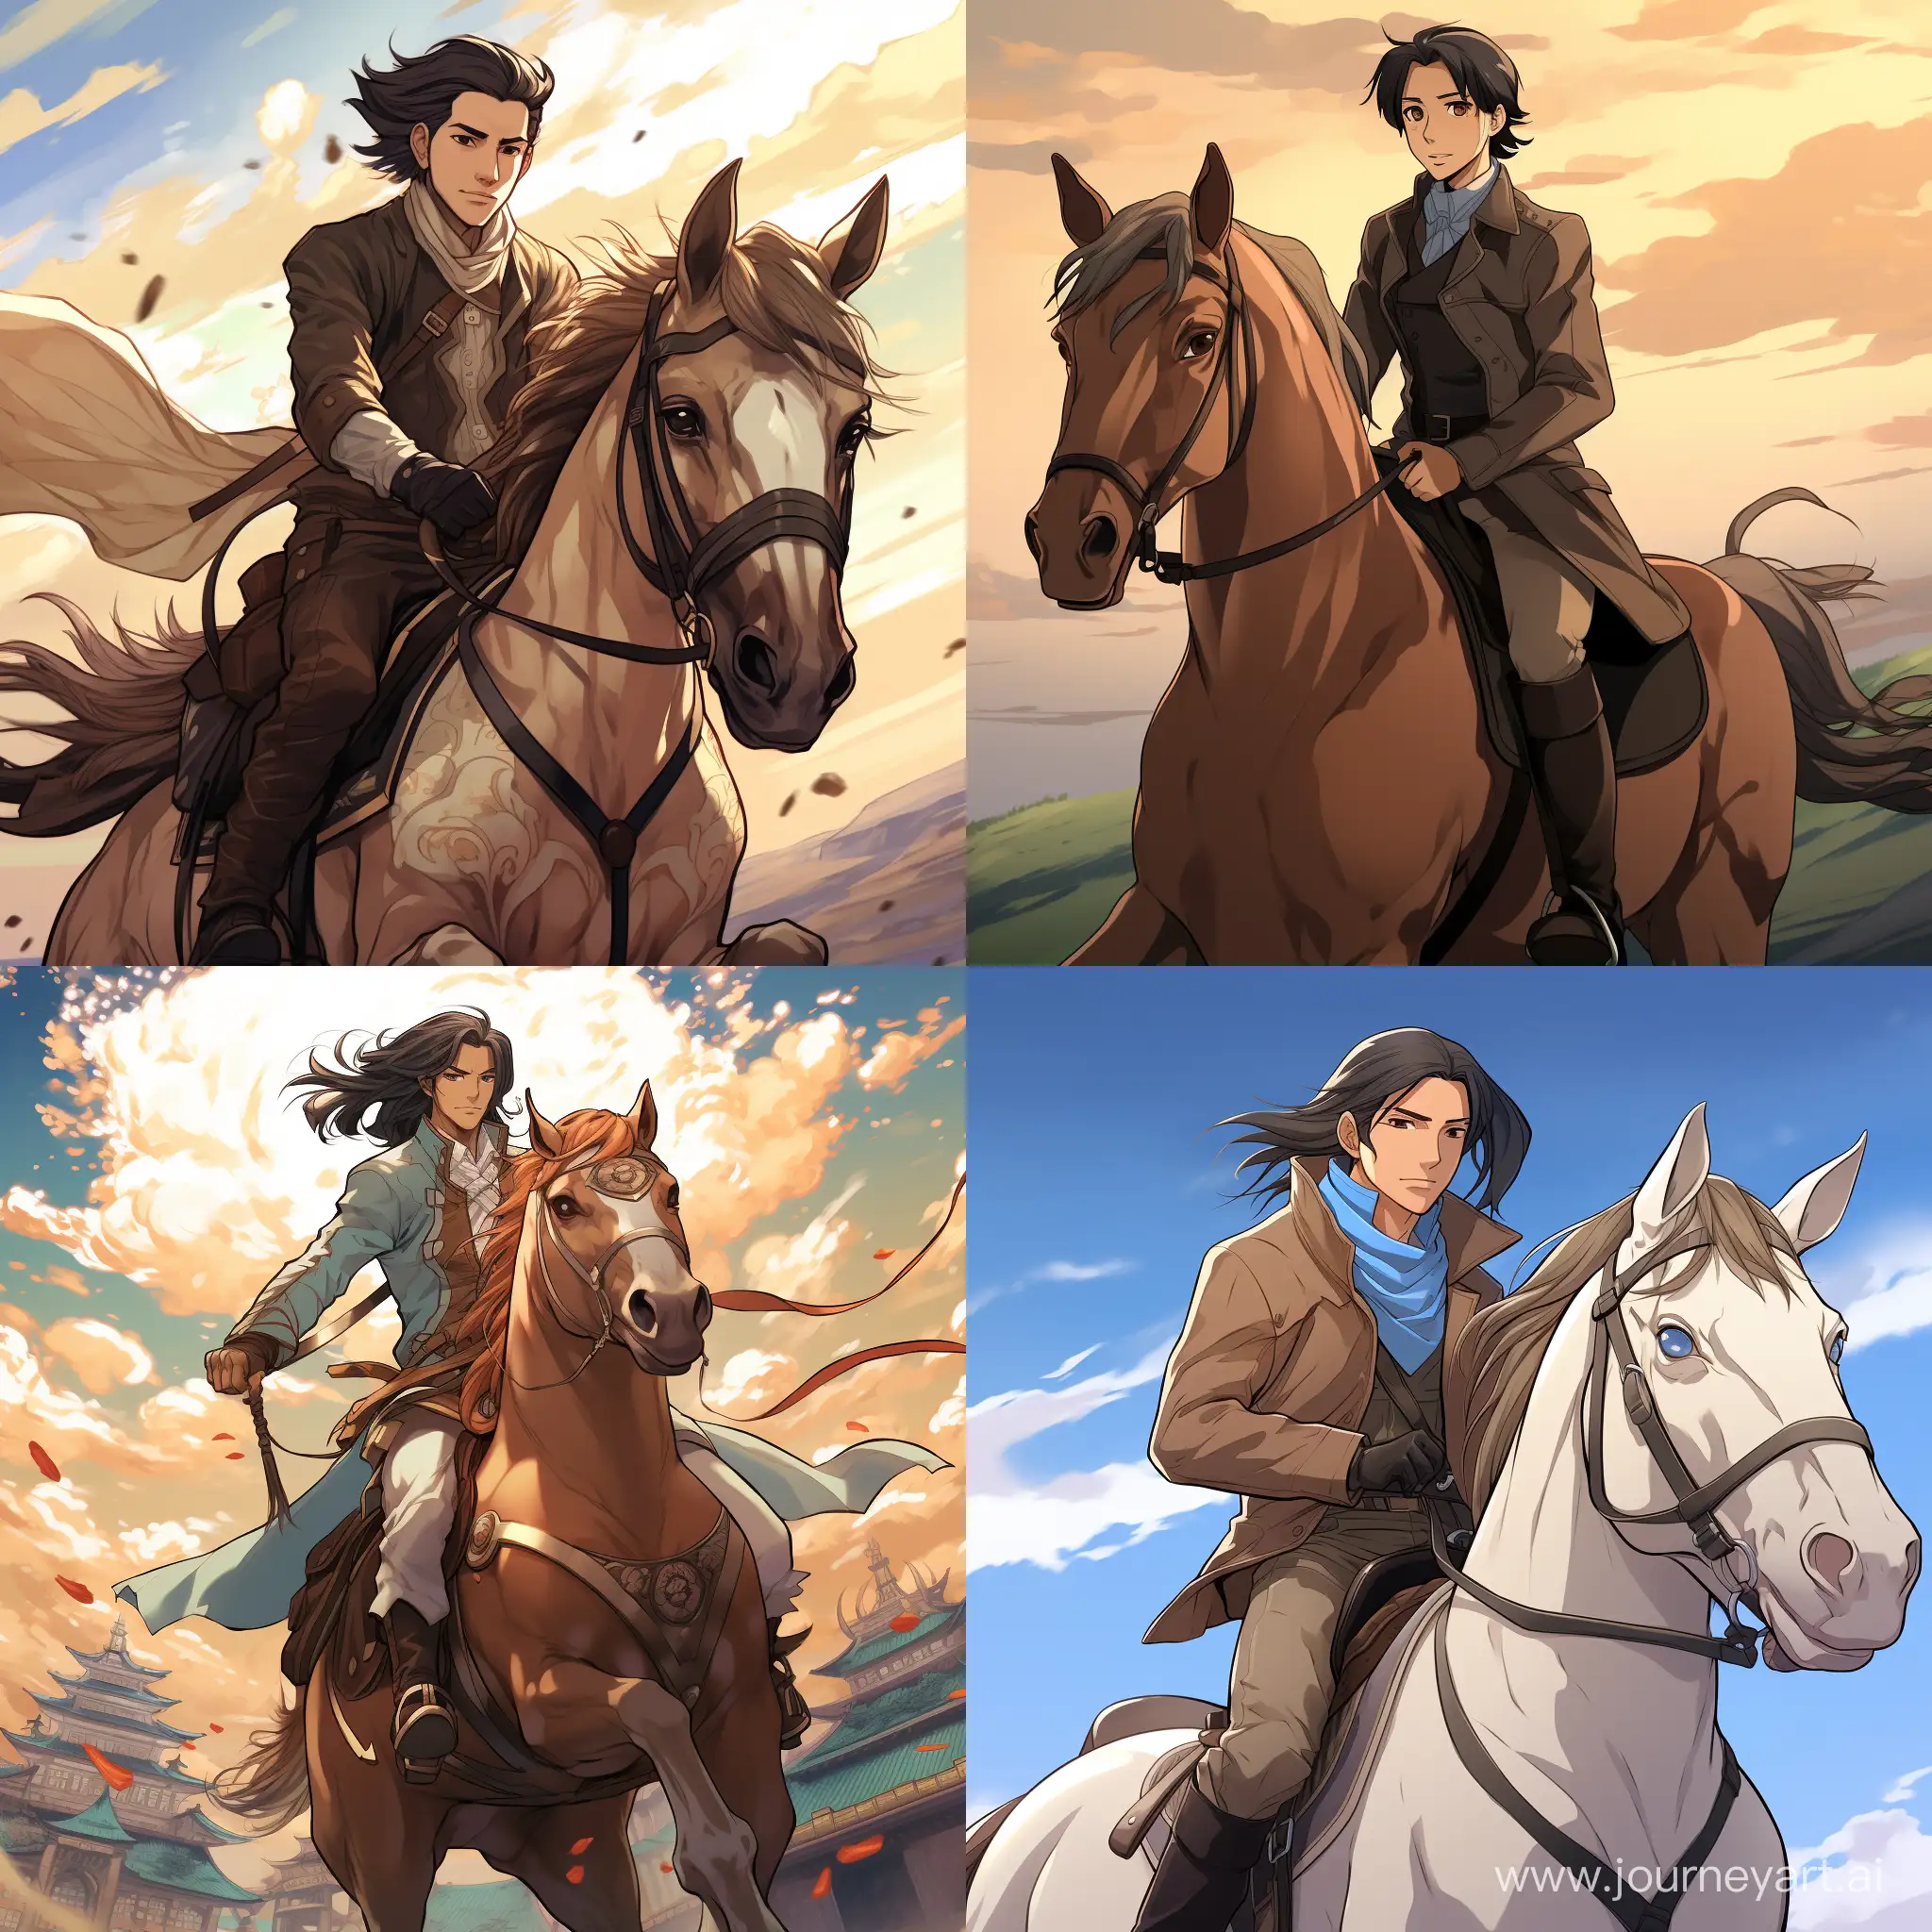 AnimeStyle-Horseback-Riding-Adventure